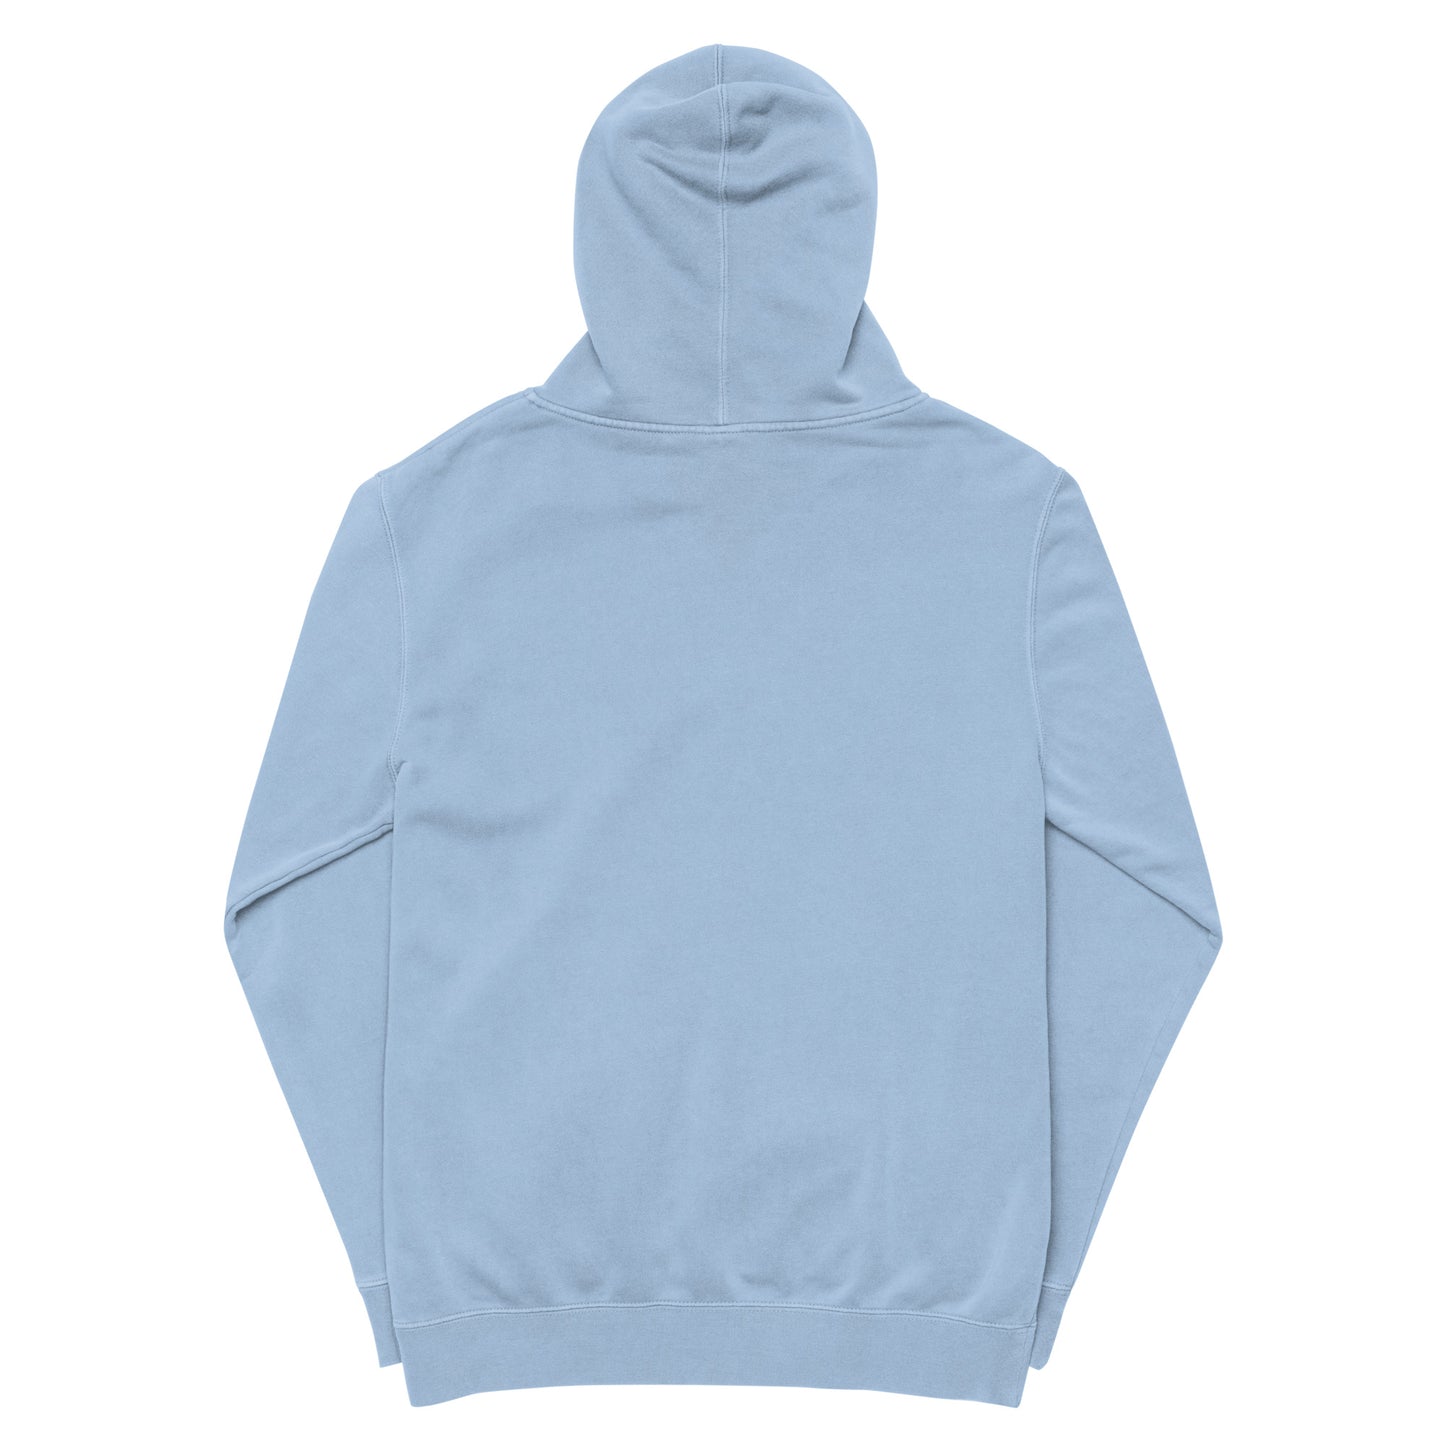 RSN - pigment-dyed Radiant hoodie